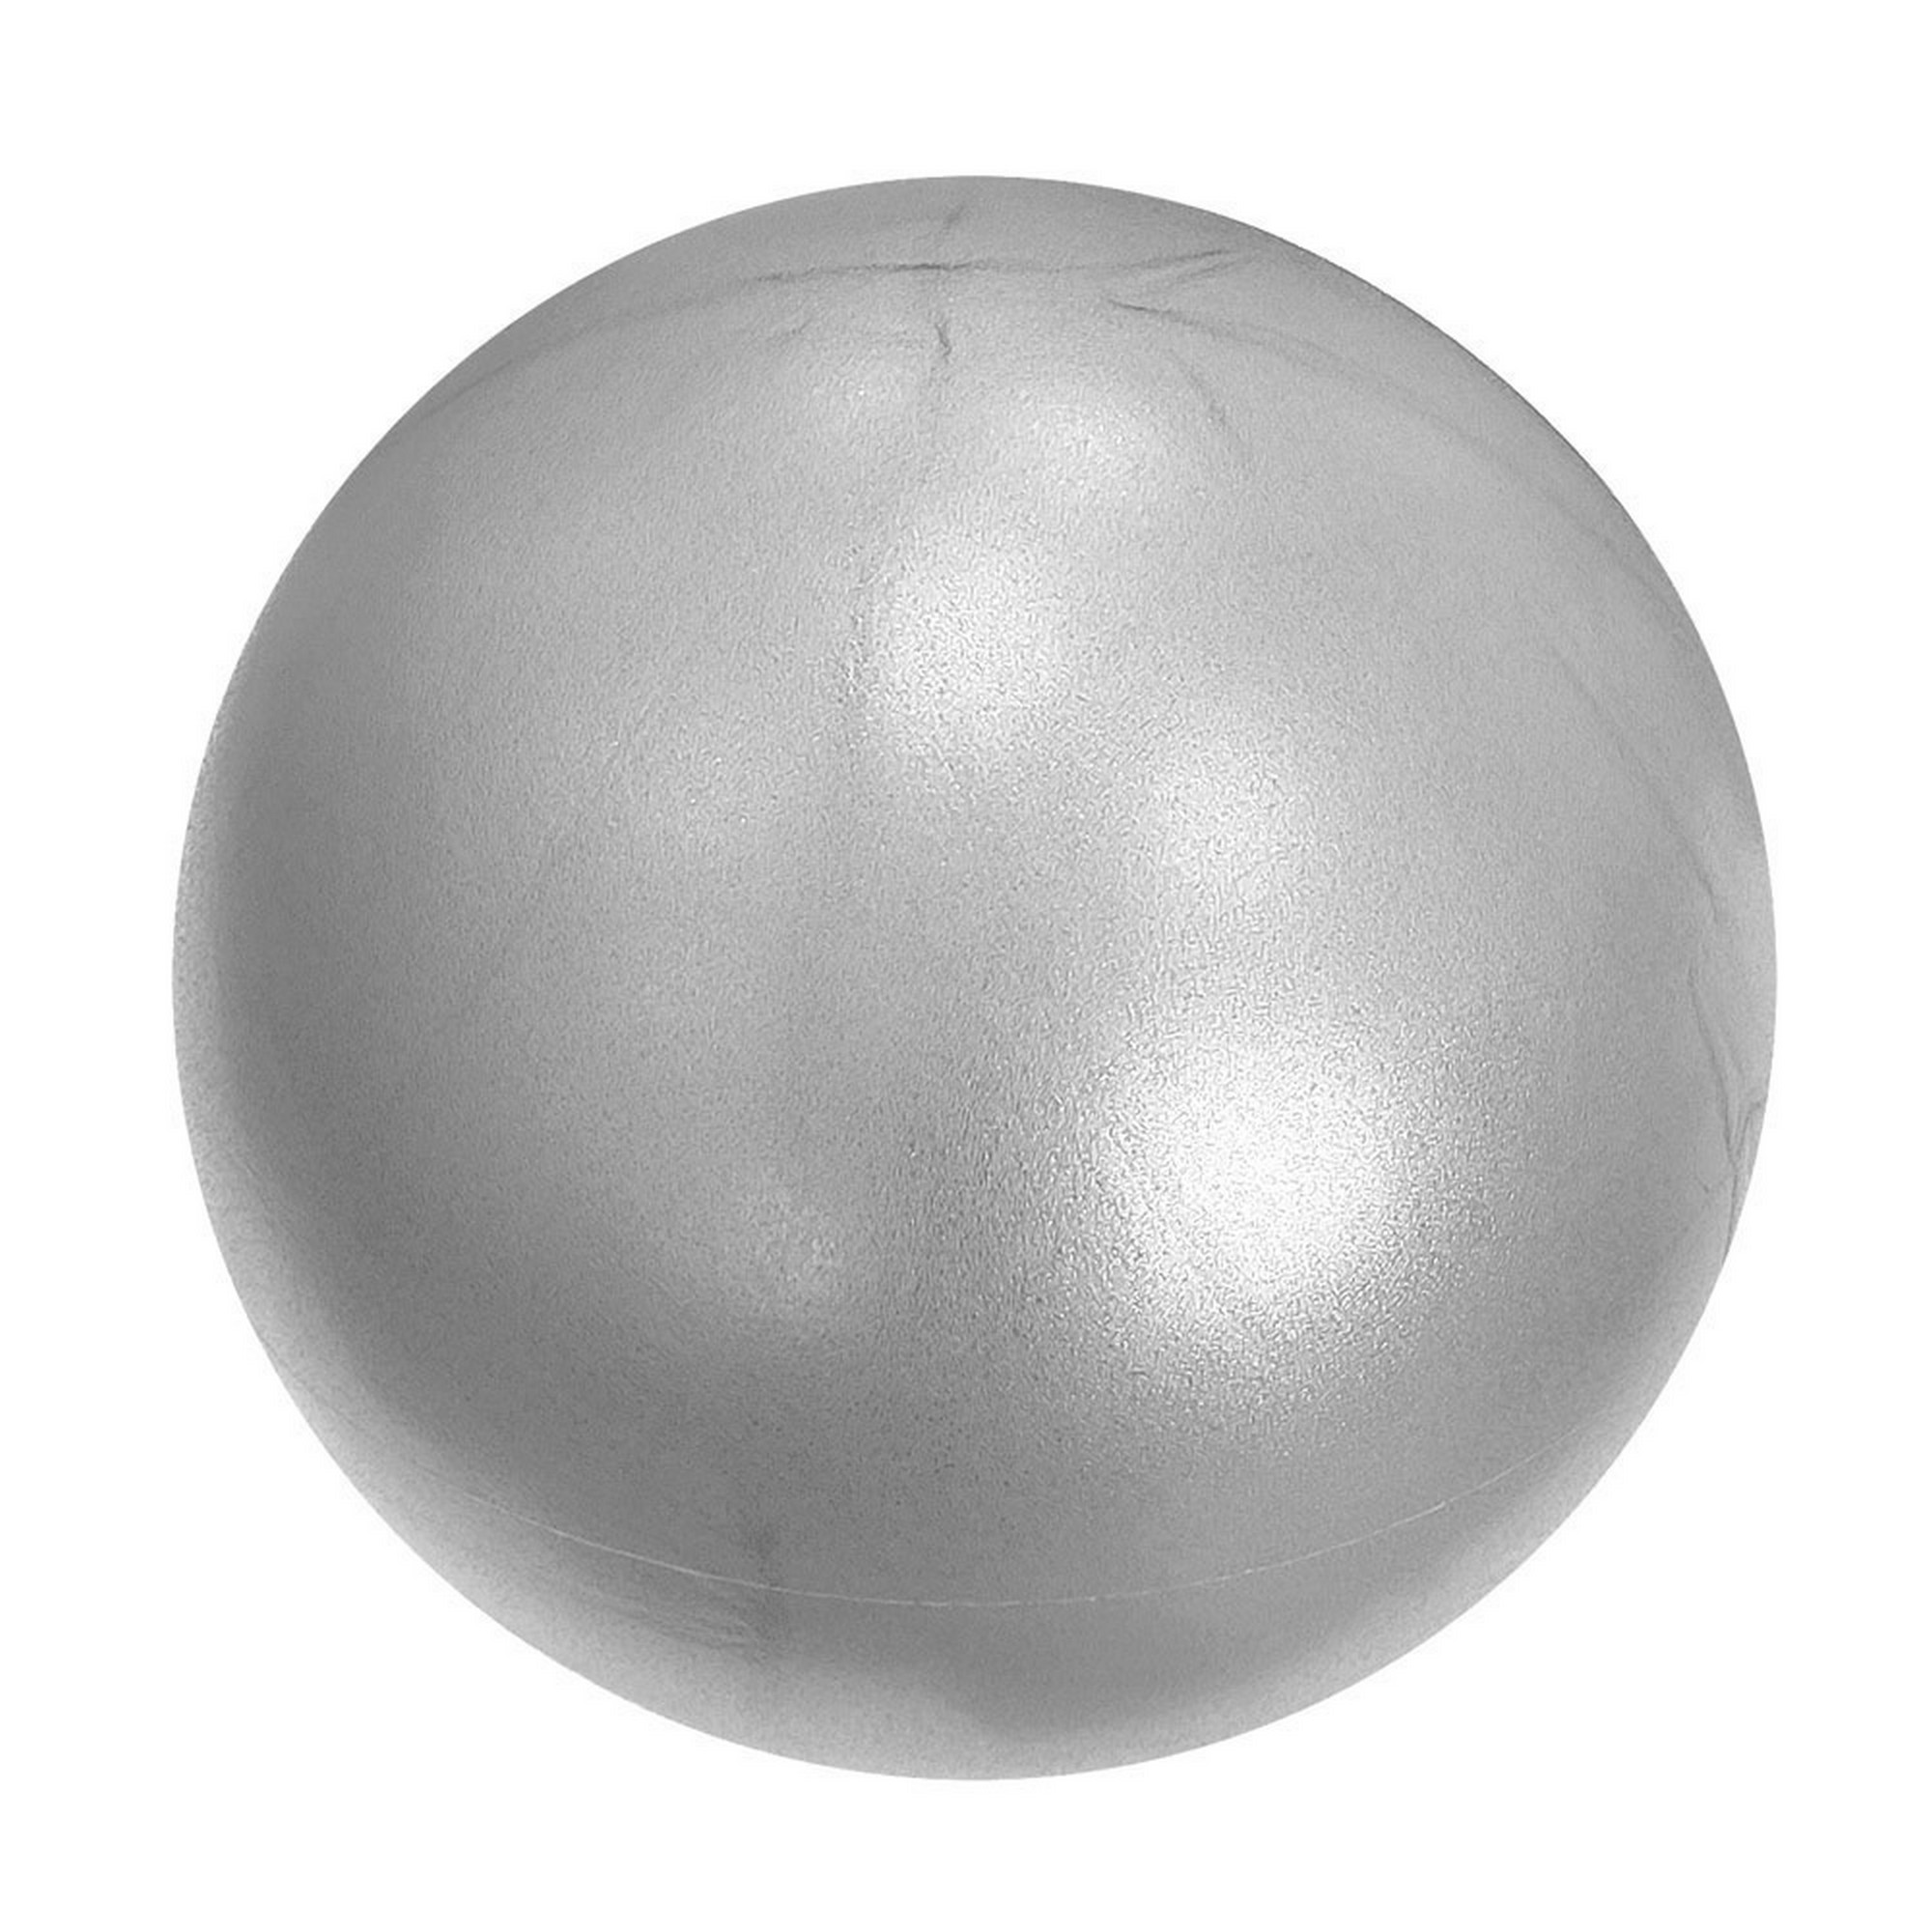 Мяч для пилатеса d20 см Sportex E3913147 серебро - фото 1